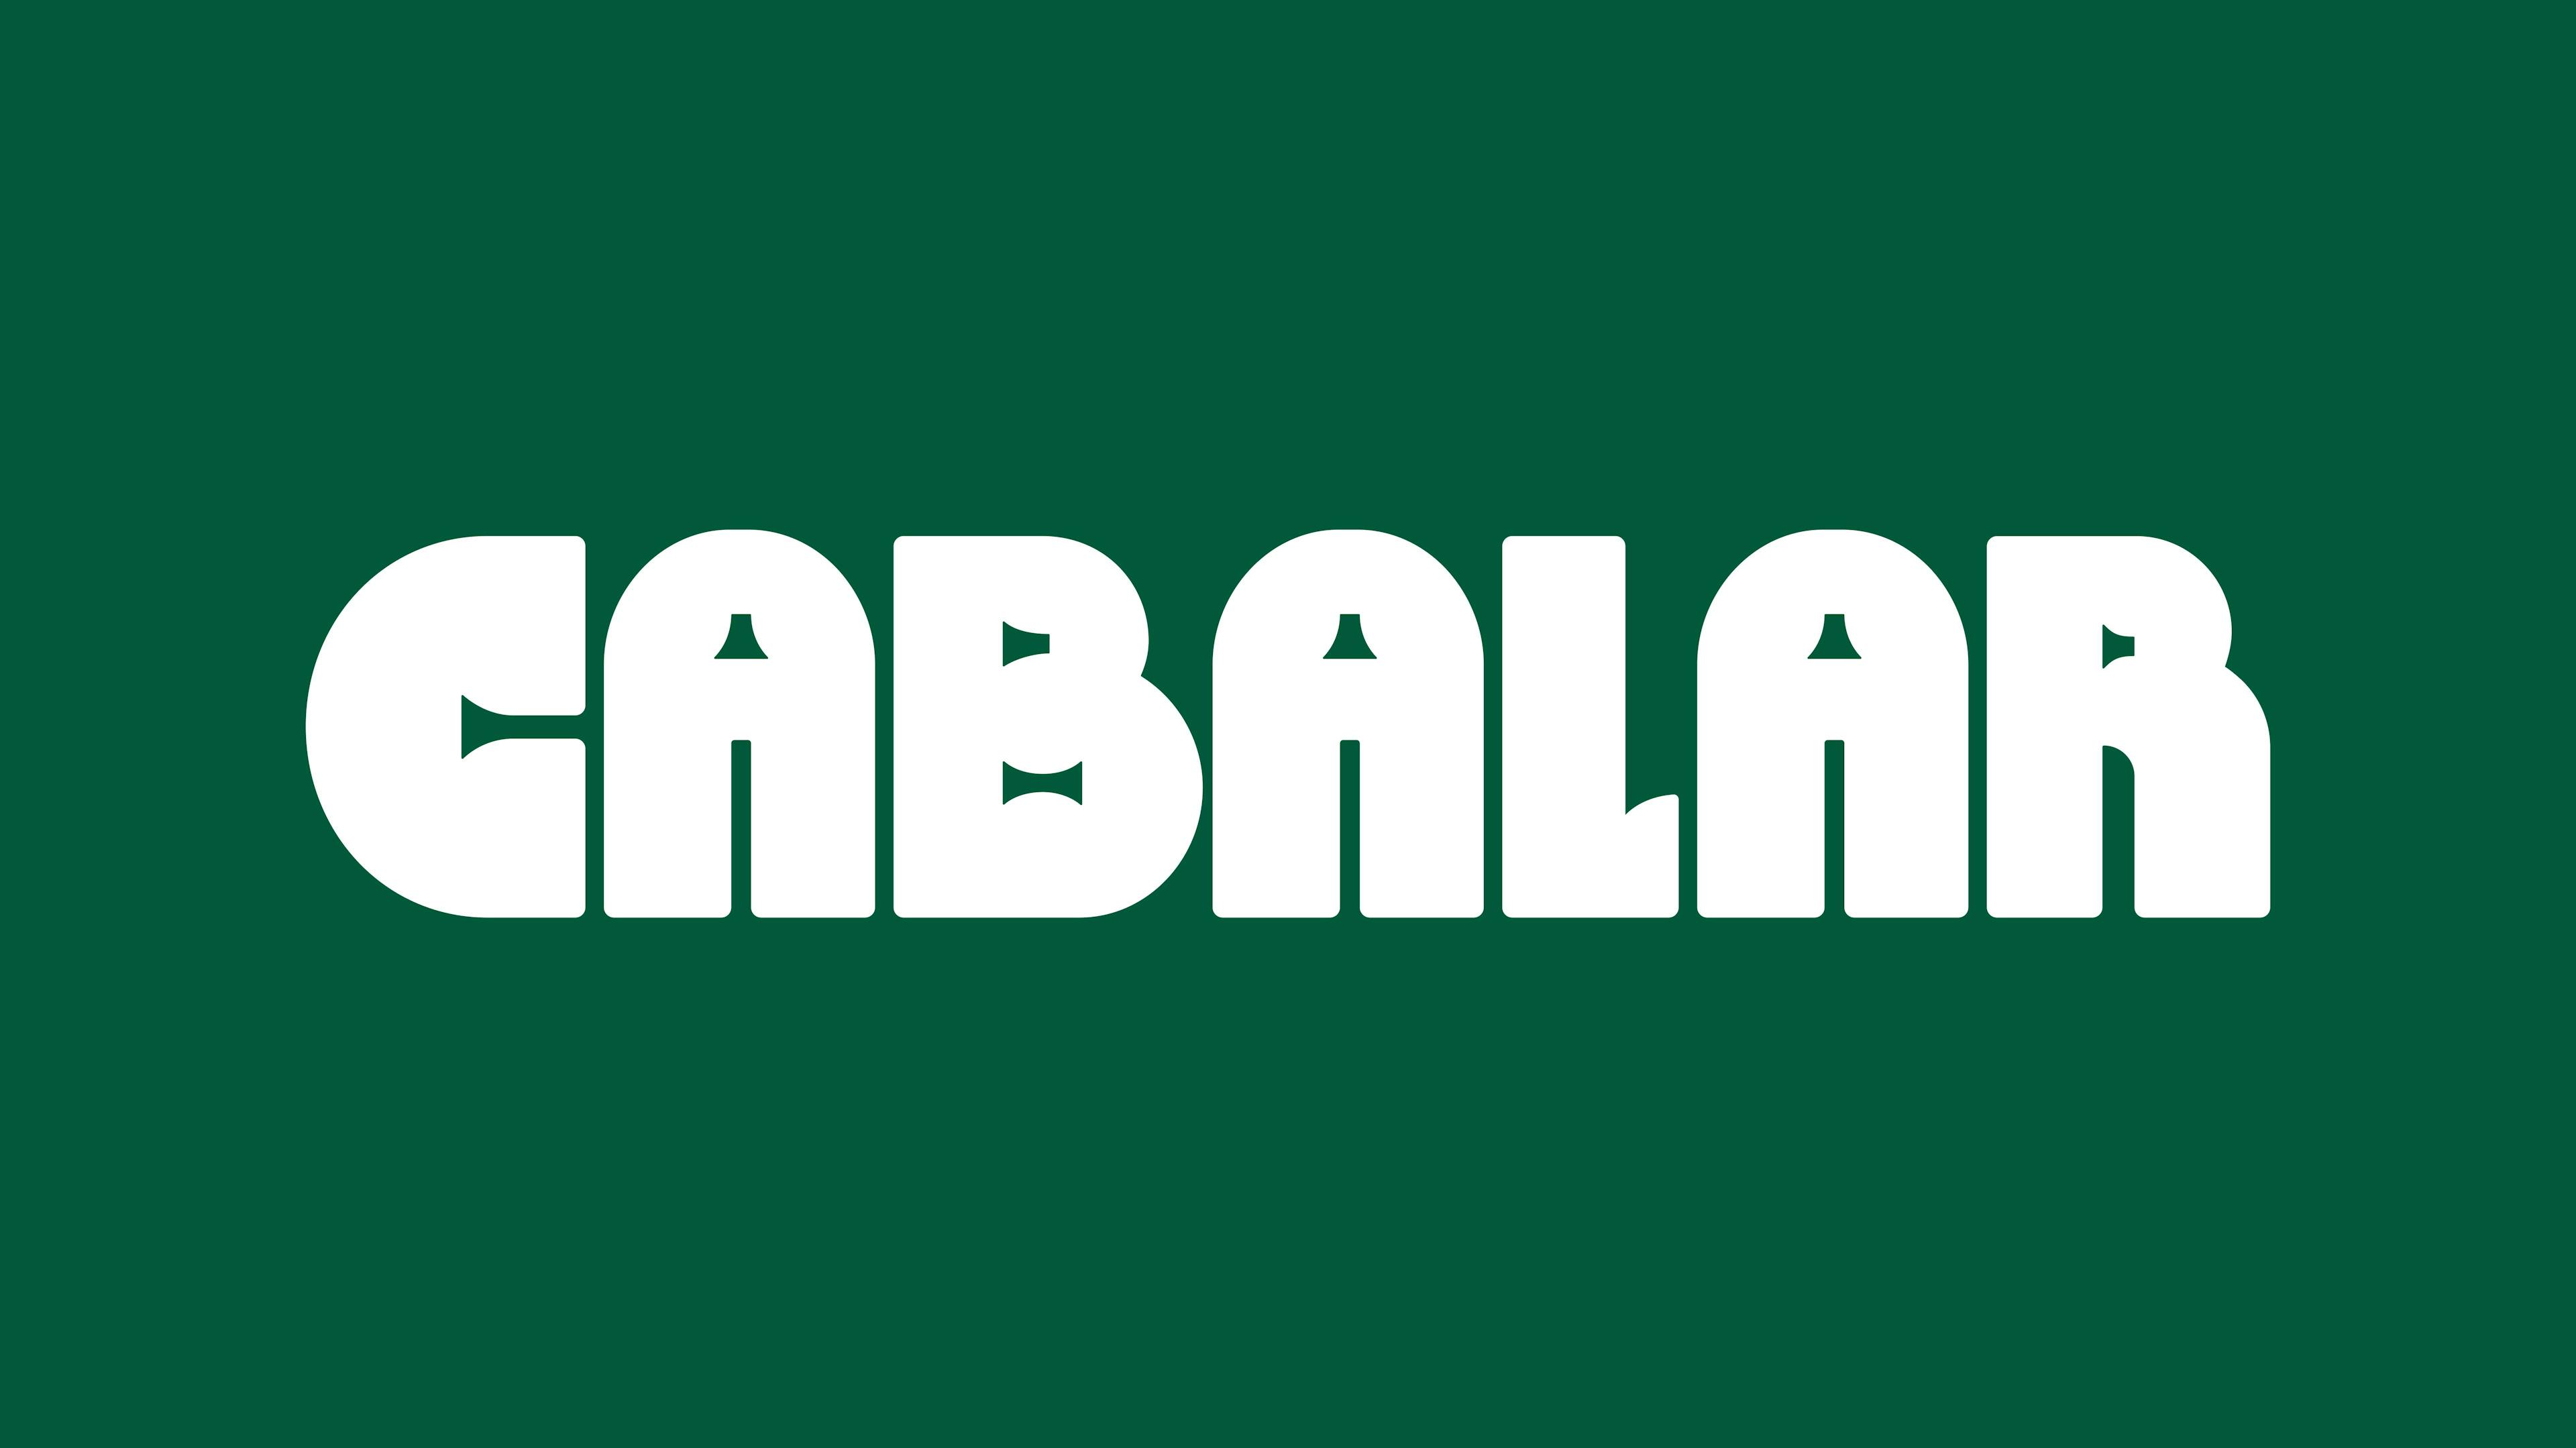 Cabalar Logotype